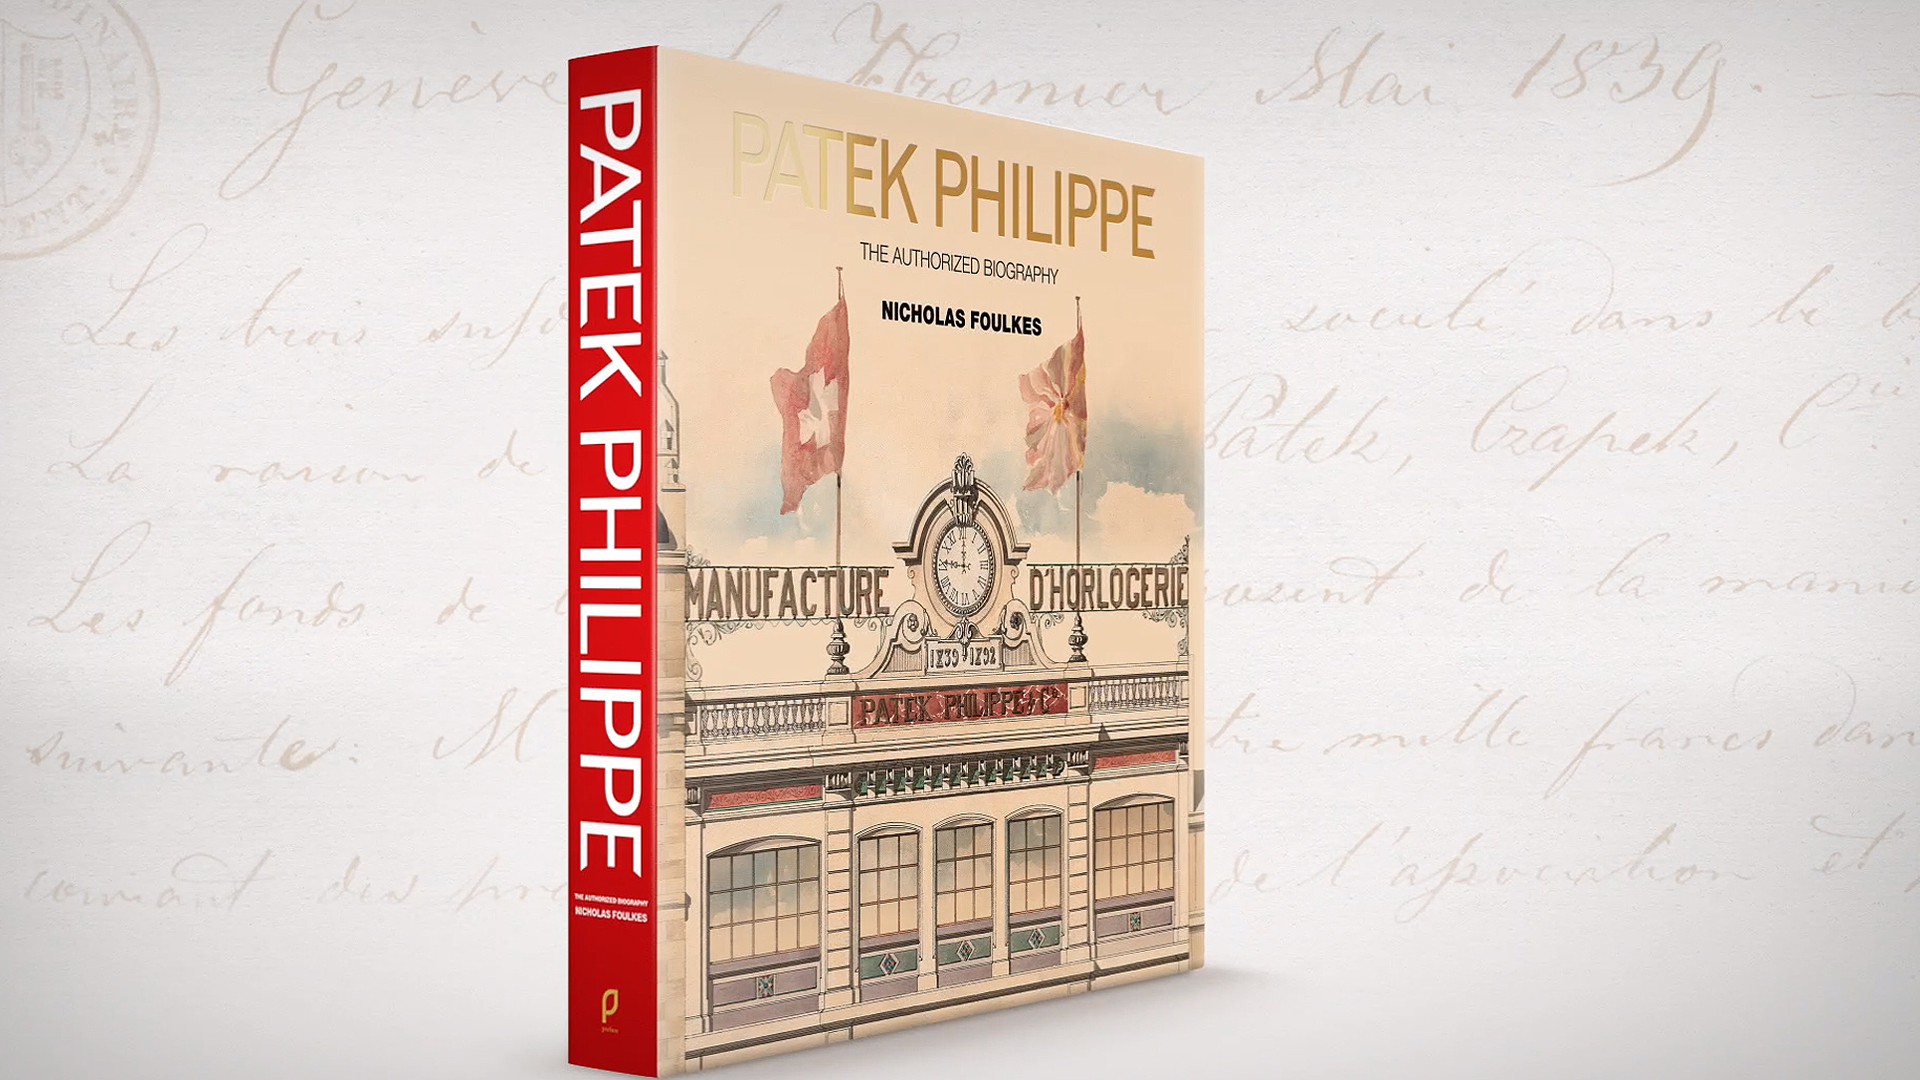 Patek Philippe | パテック フィリップ | ライブラリー | 『パテック 